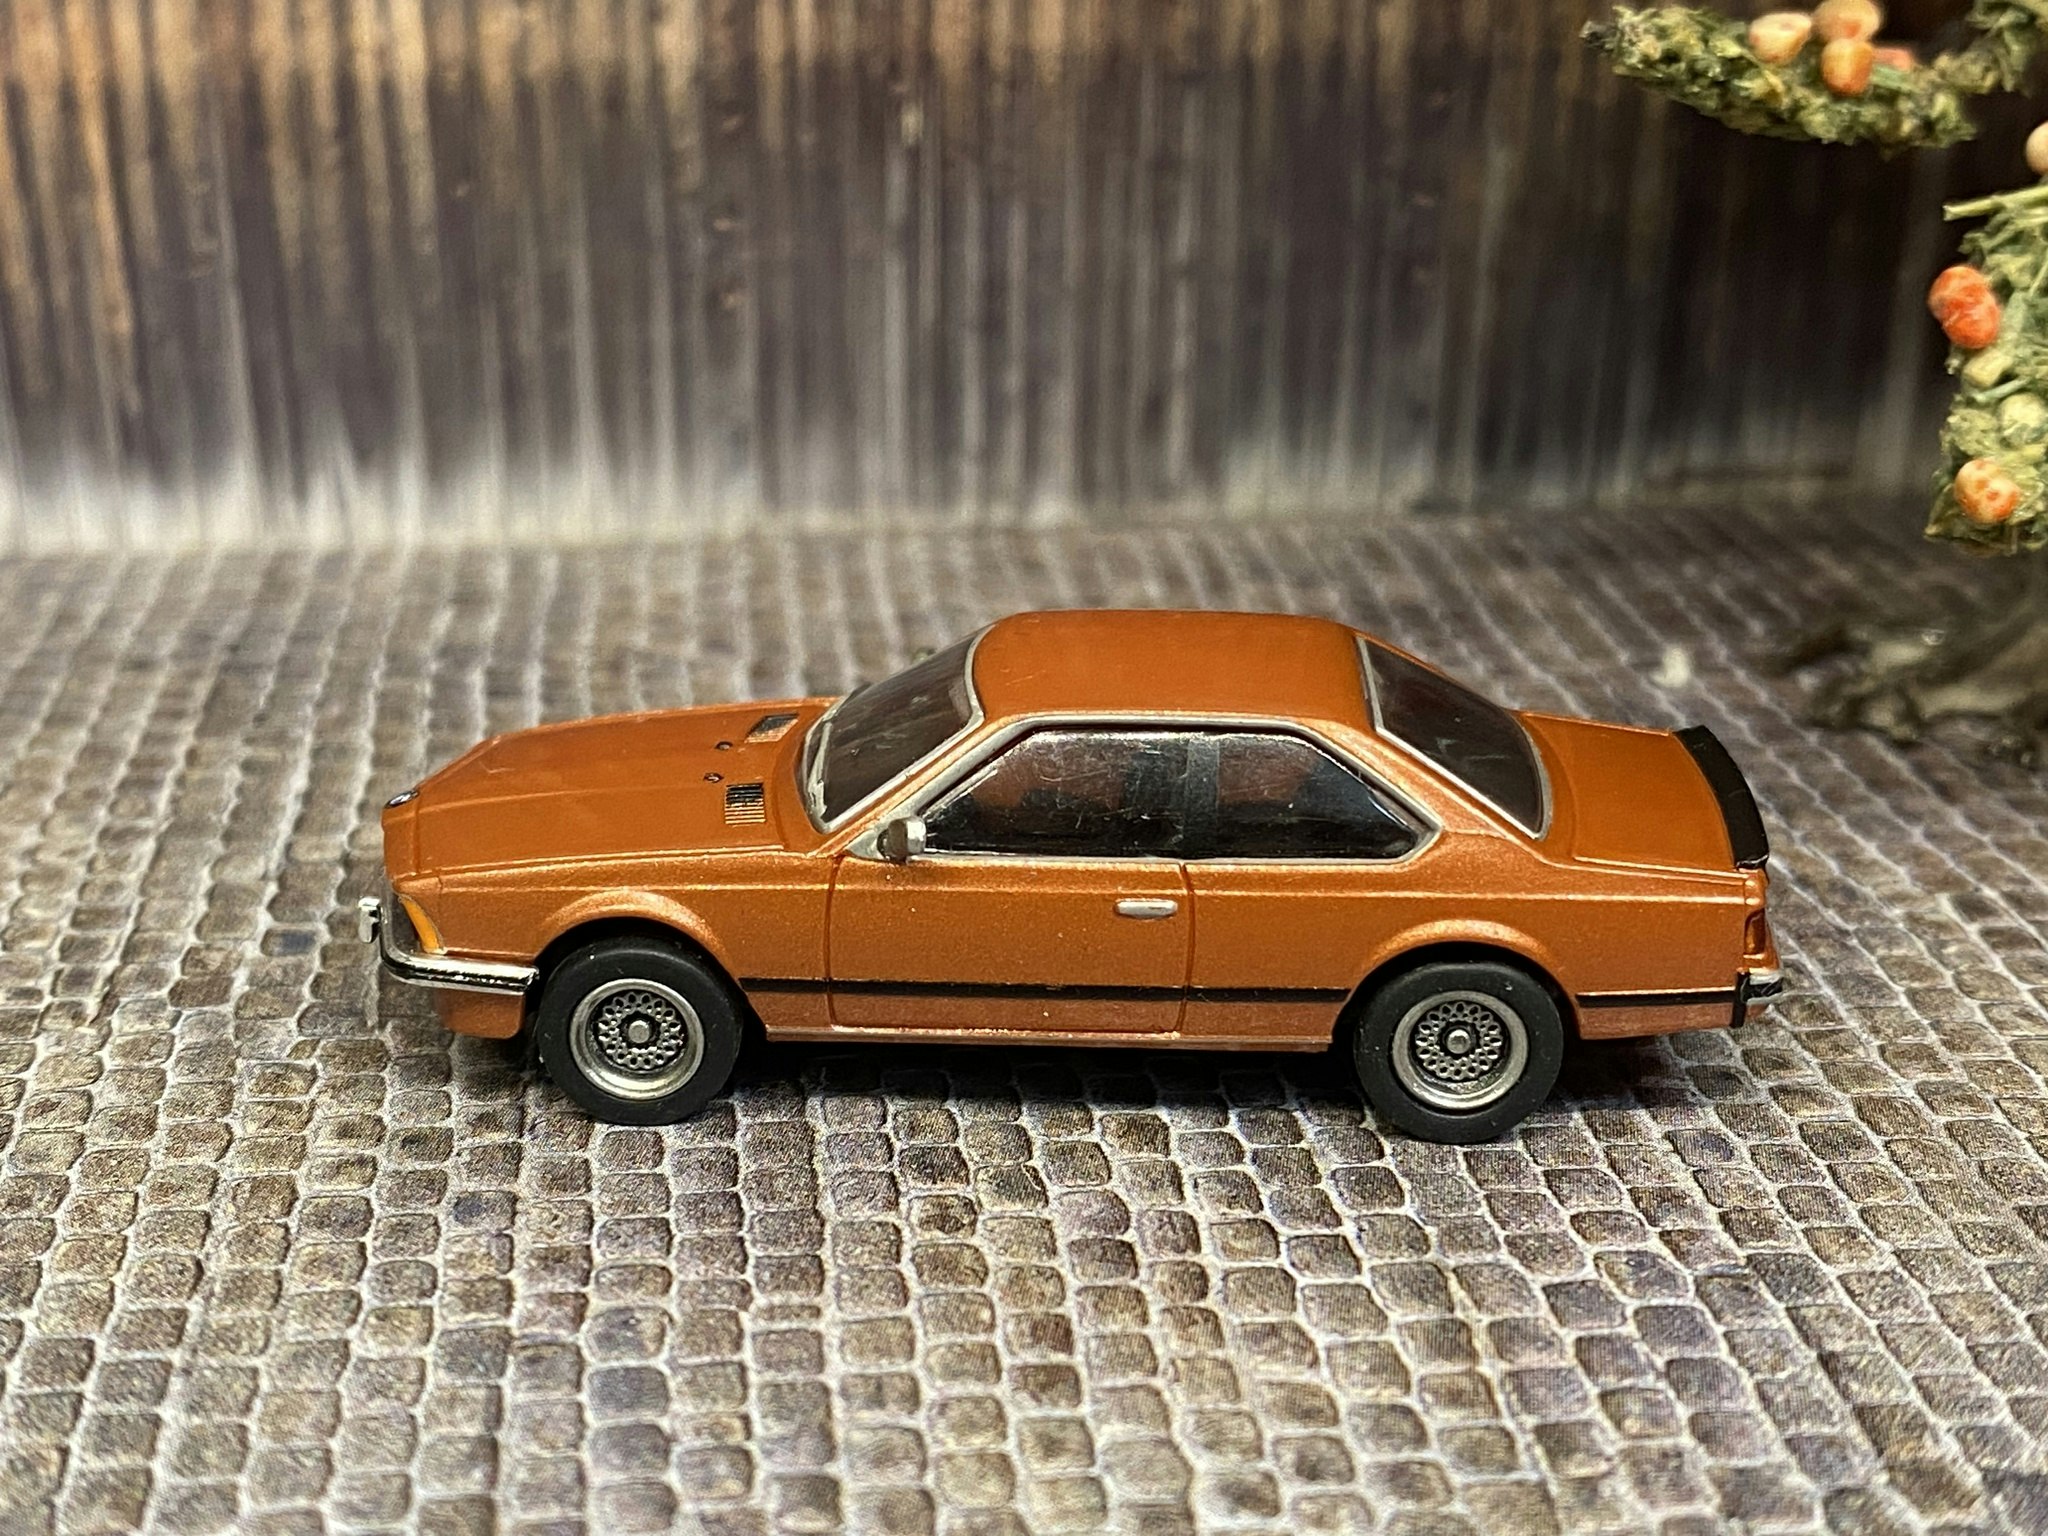 Skala 1/87 - BMW 635i, Orange metallic (koppar) fr Brekina